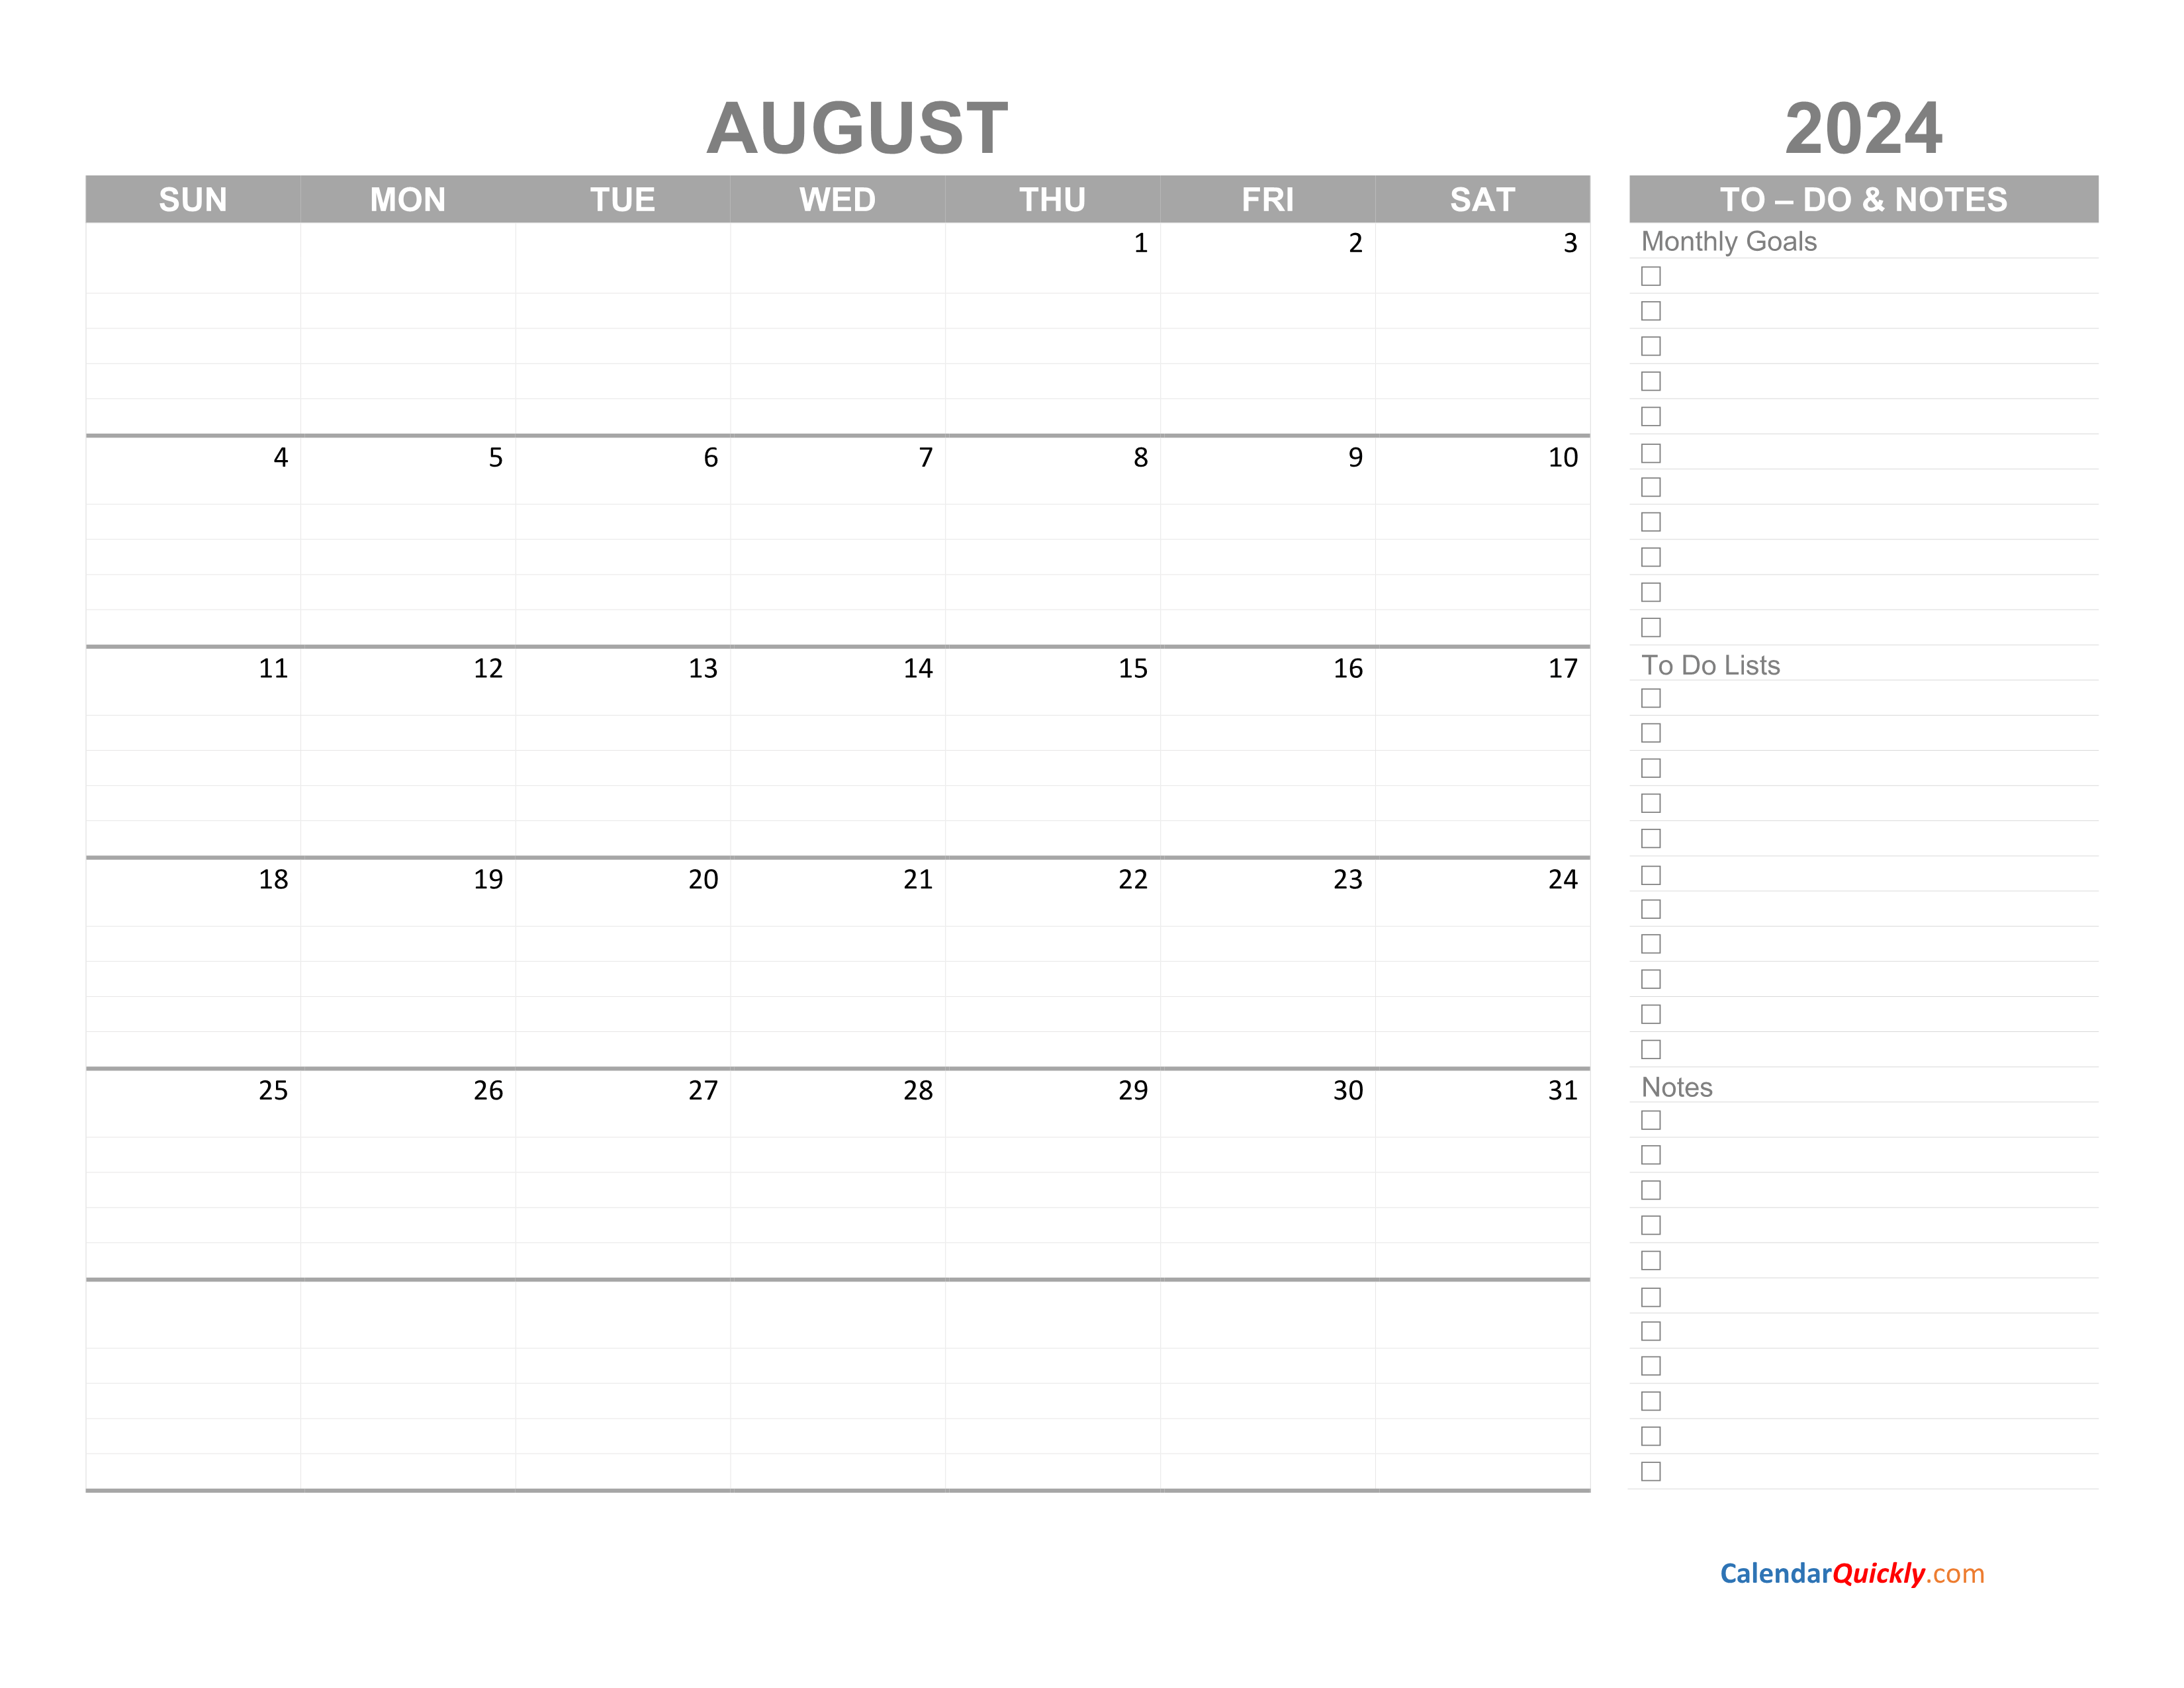 August 2024 Calendar with ToDo List Calendar Quickly